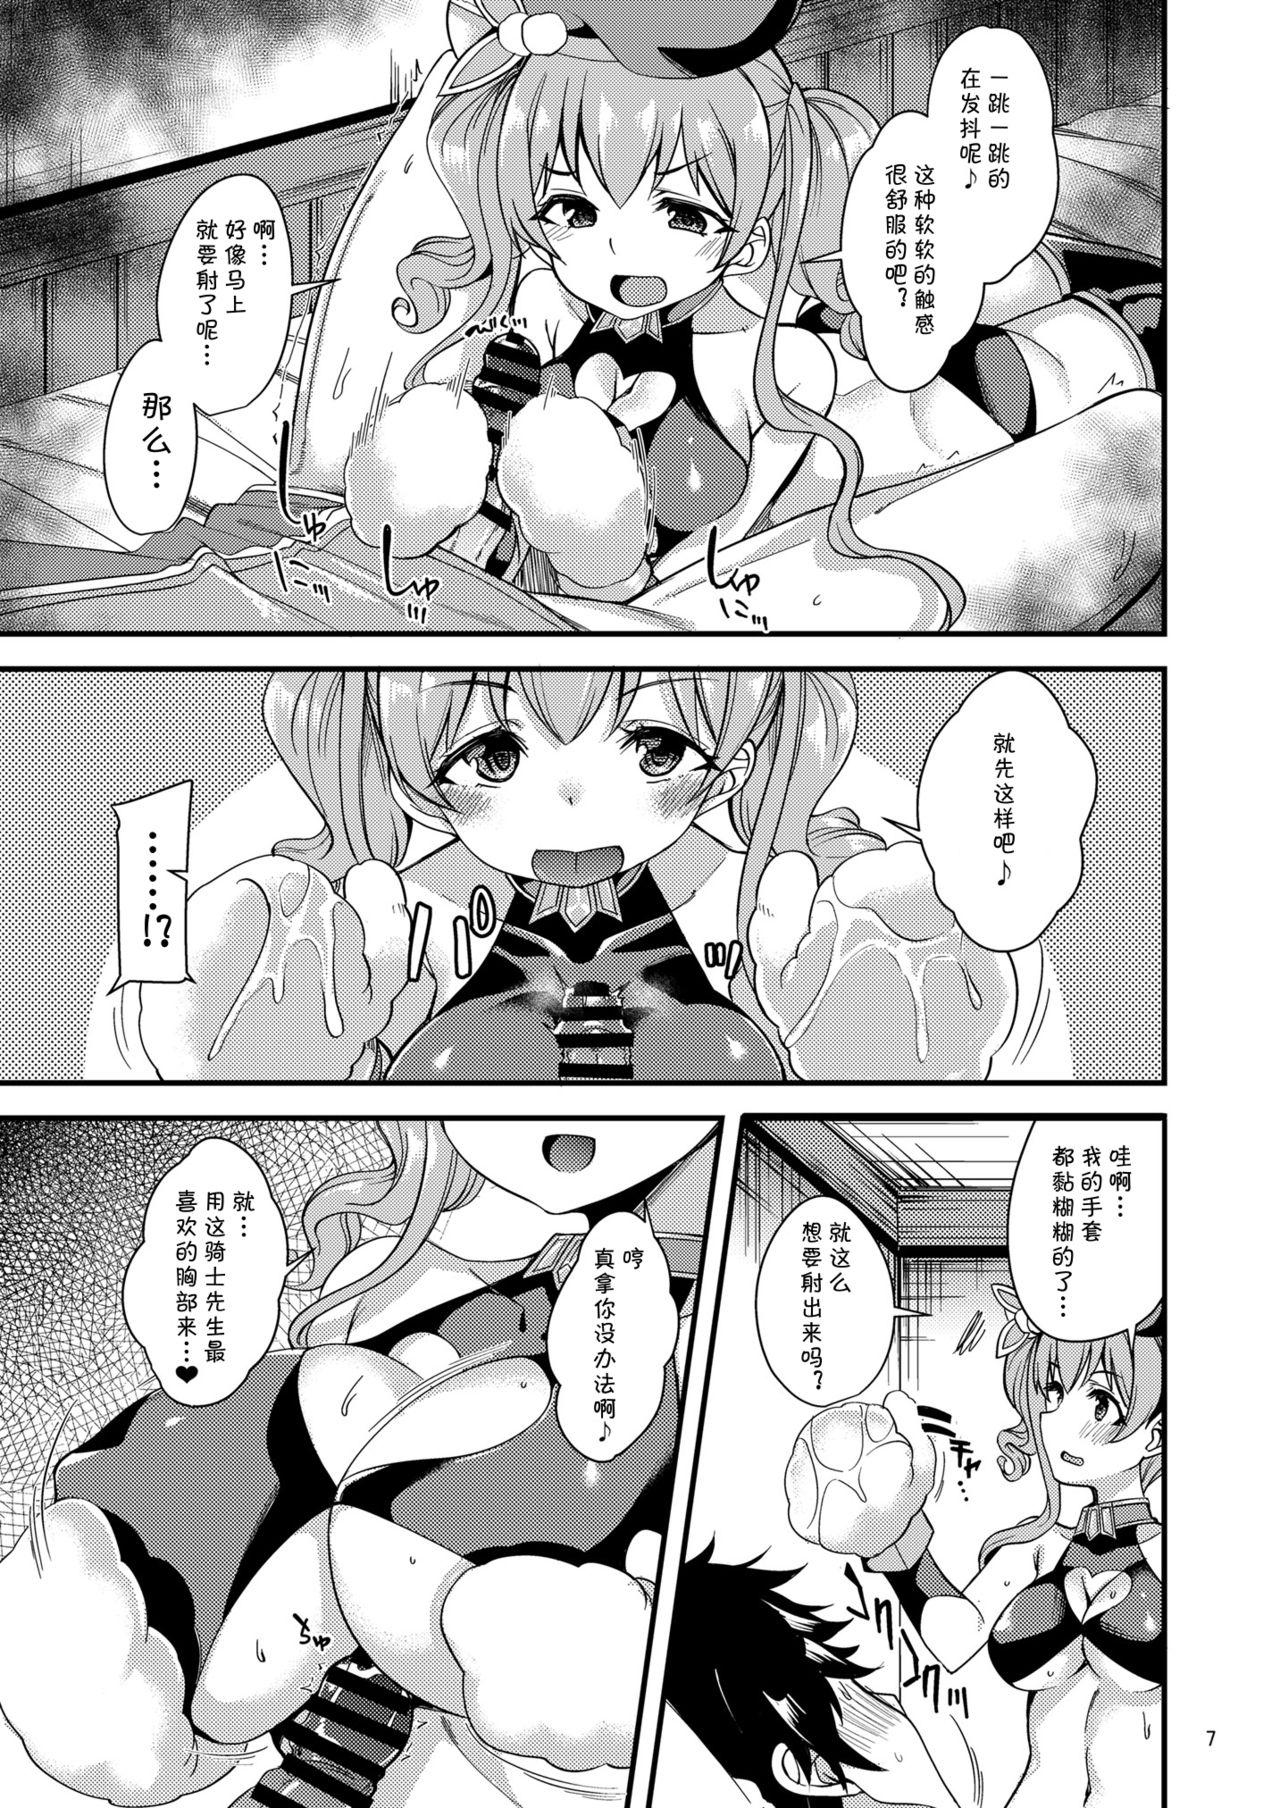 Fucked Tsumugi Make Heroine Move!! 04 - Princess connect Rimjob - Page 8